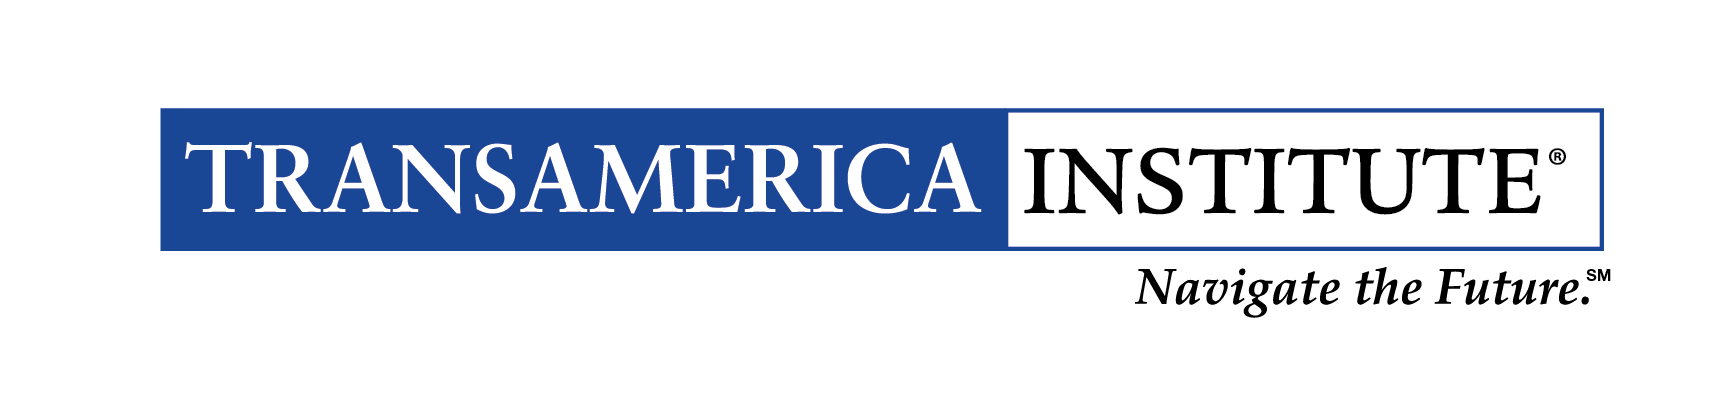 TransAmerica Institute logo